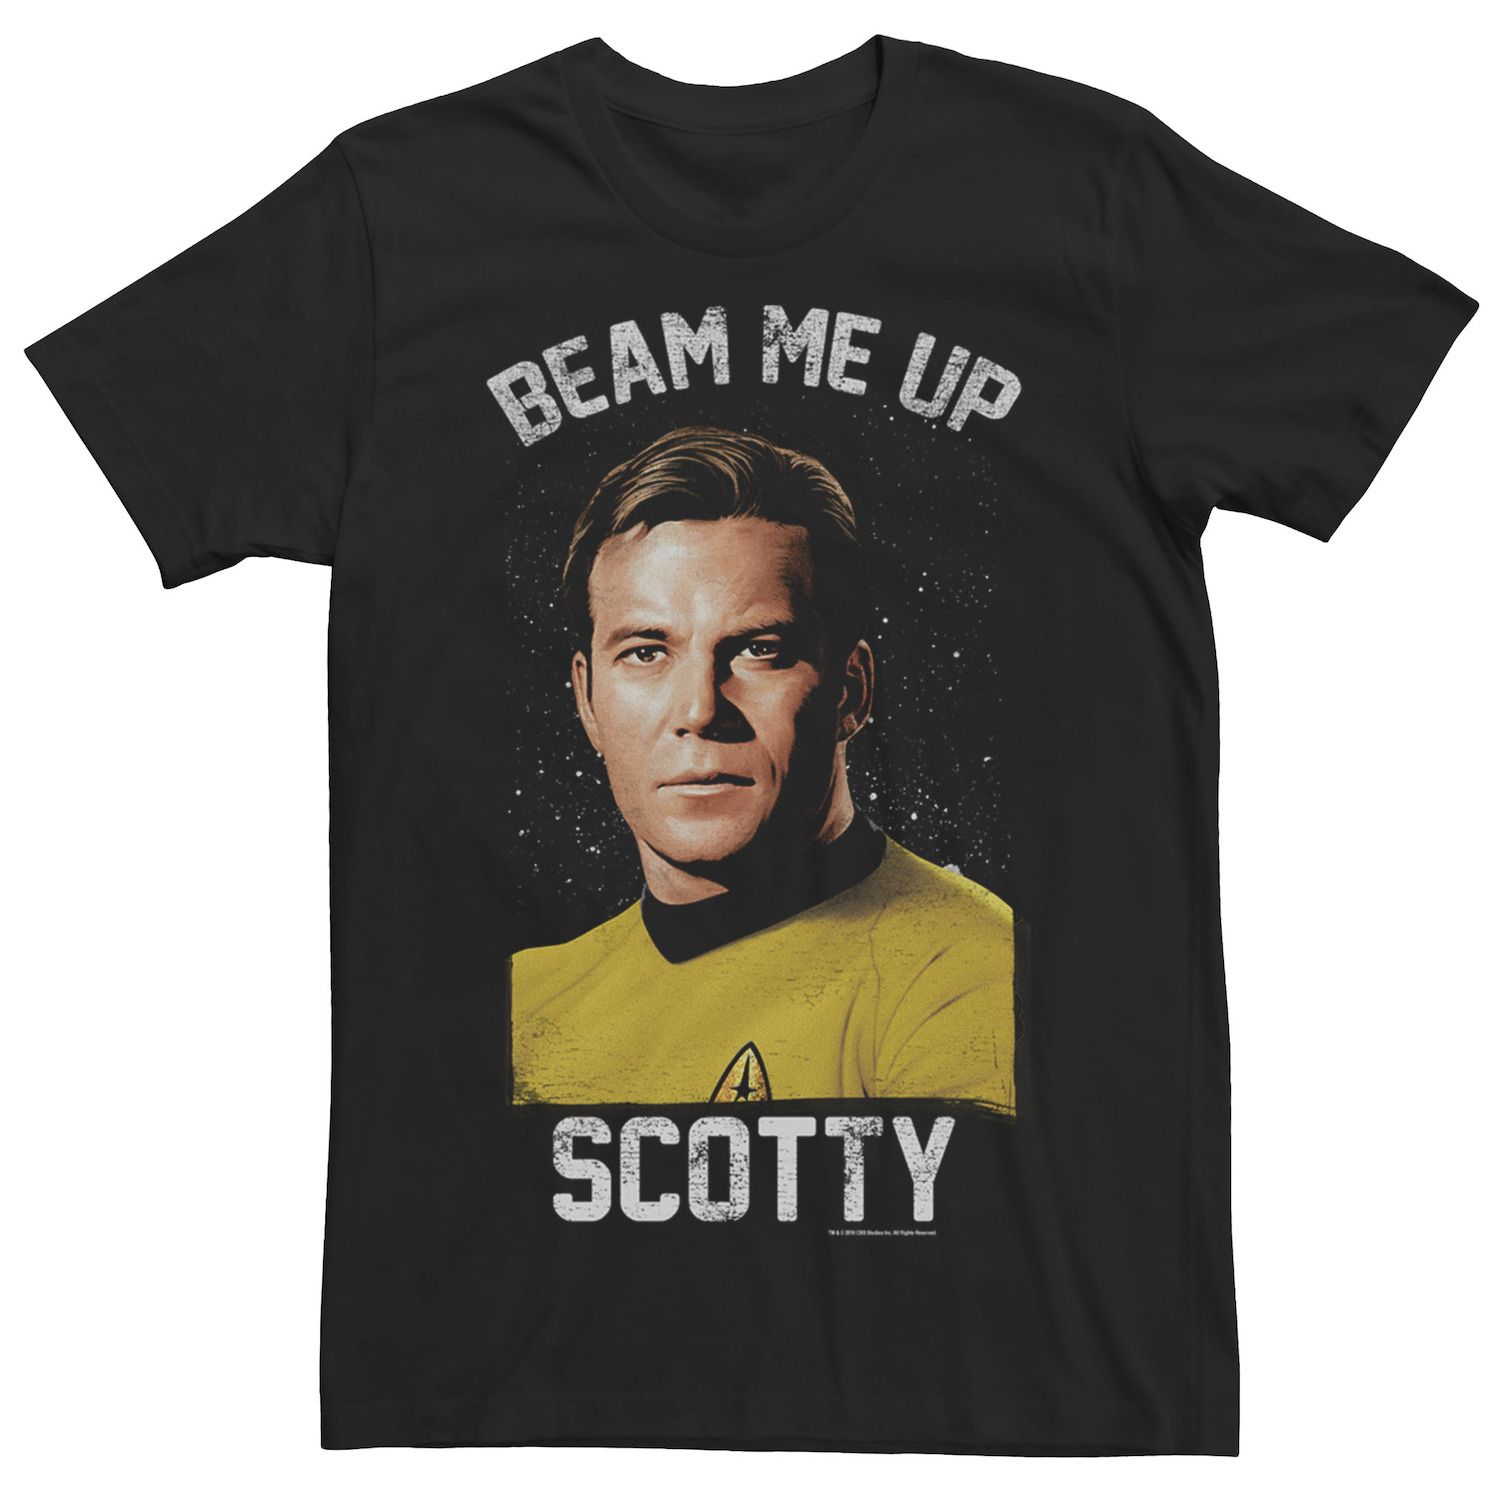 Мужская футболка Kirk Beam Me Up из оригинальной серии Star Trek Licensed Character tubbz фигурка утка tubbz star trek james t kirk